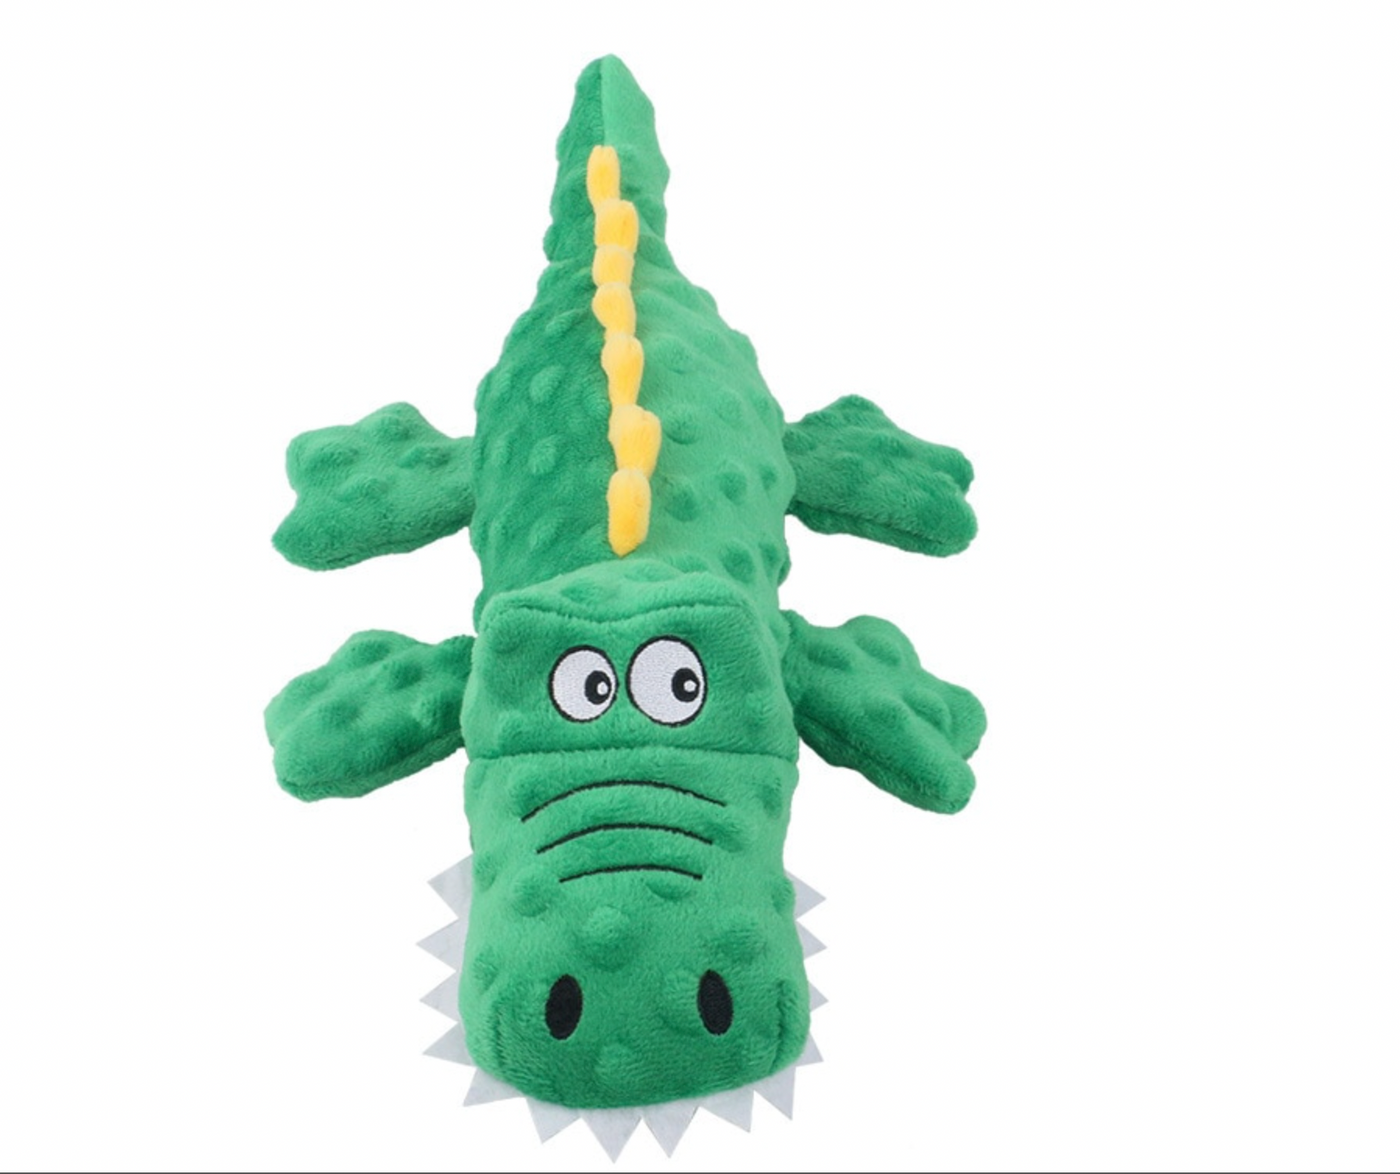 green crocodile-shaped dog toy